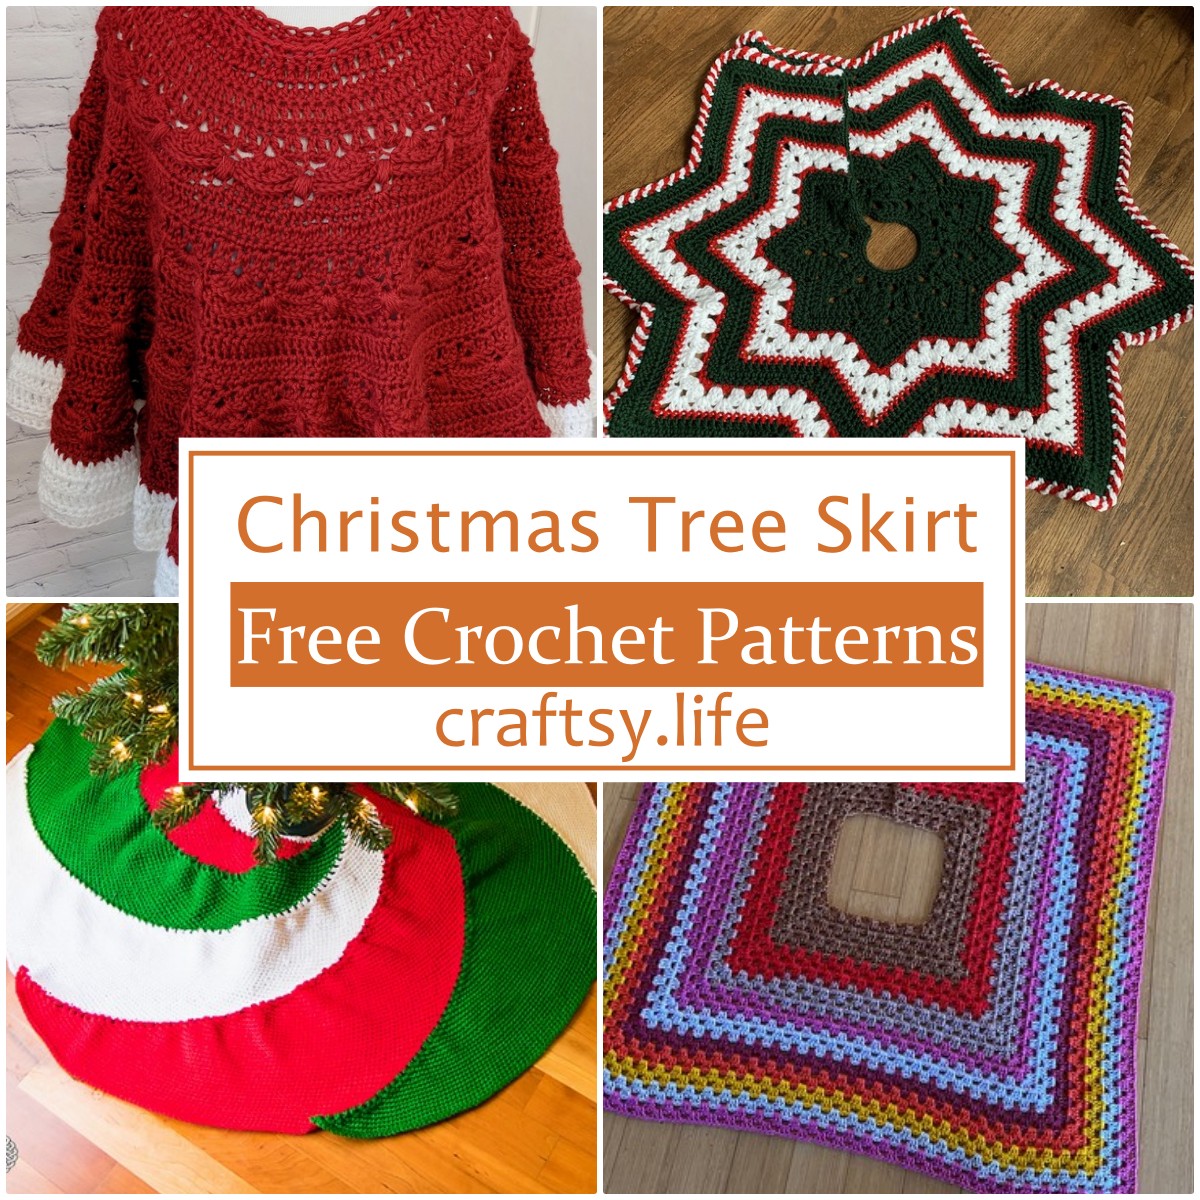 Free Crochet Christmas Tree Skirt Patterns